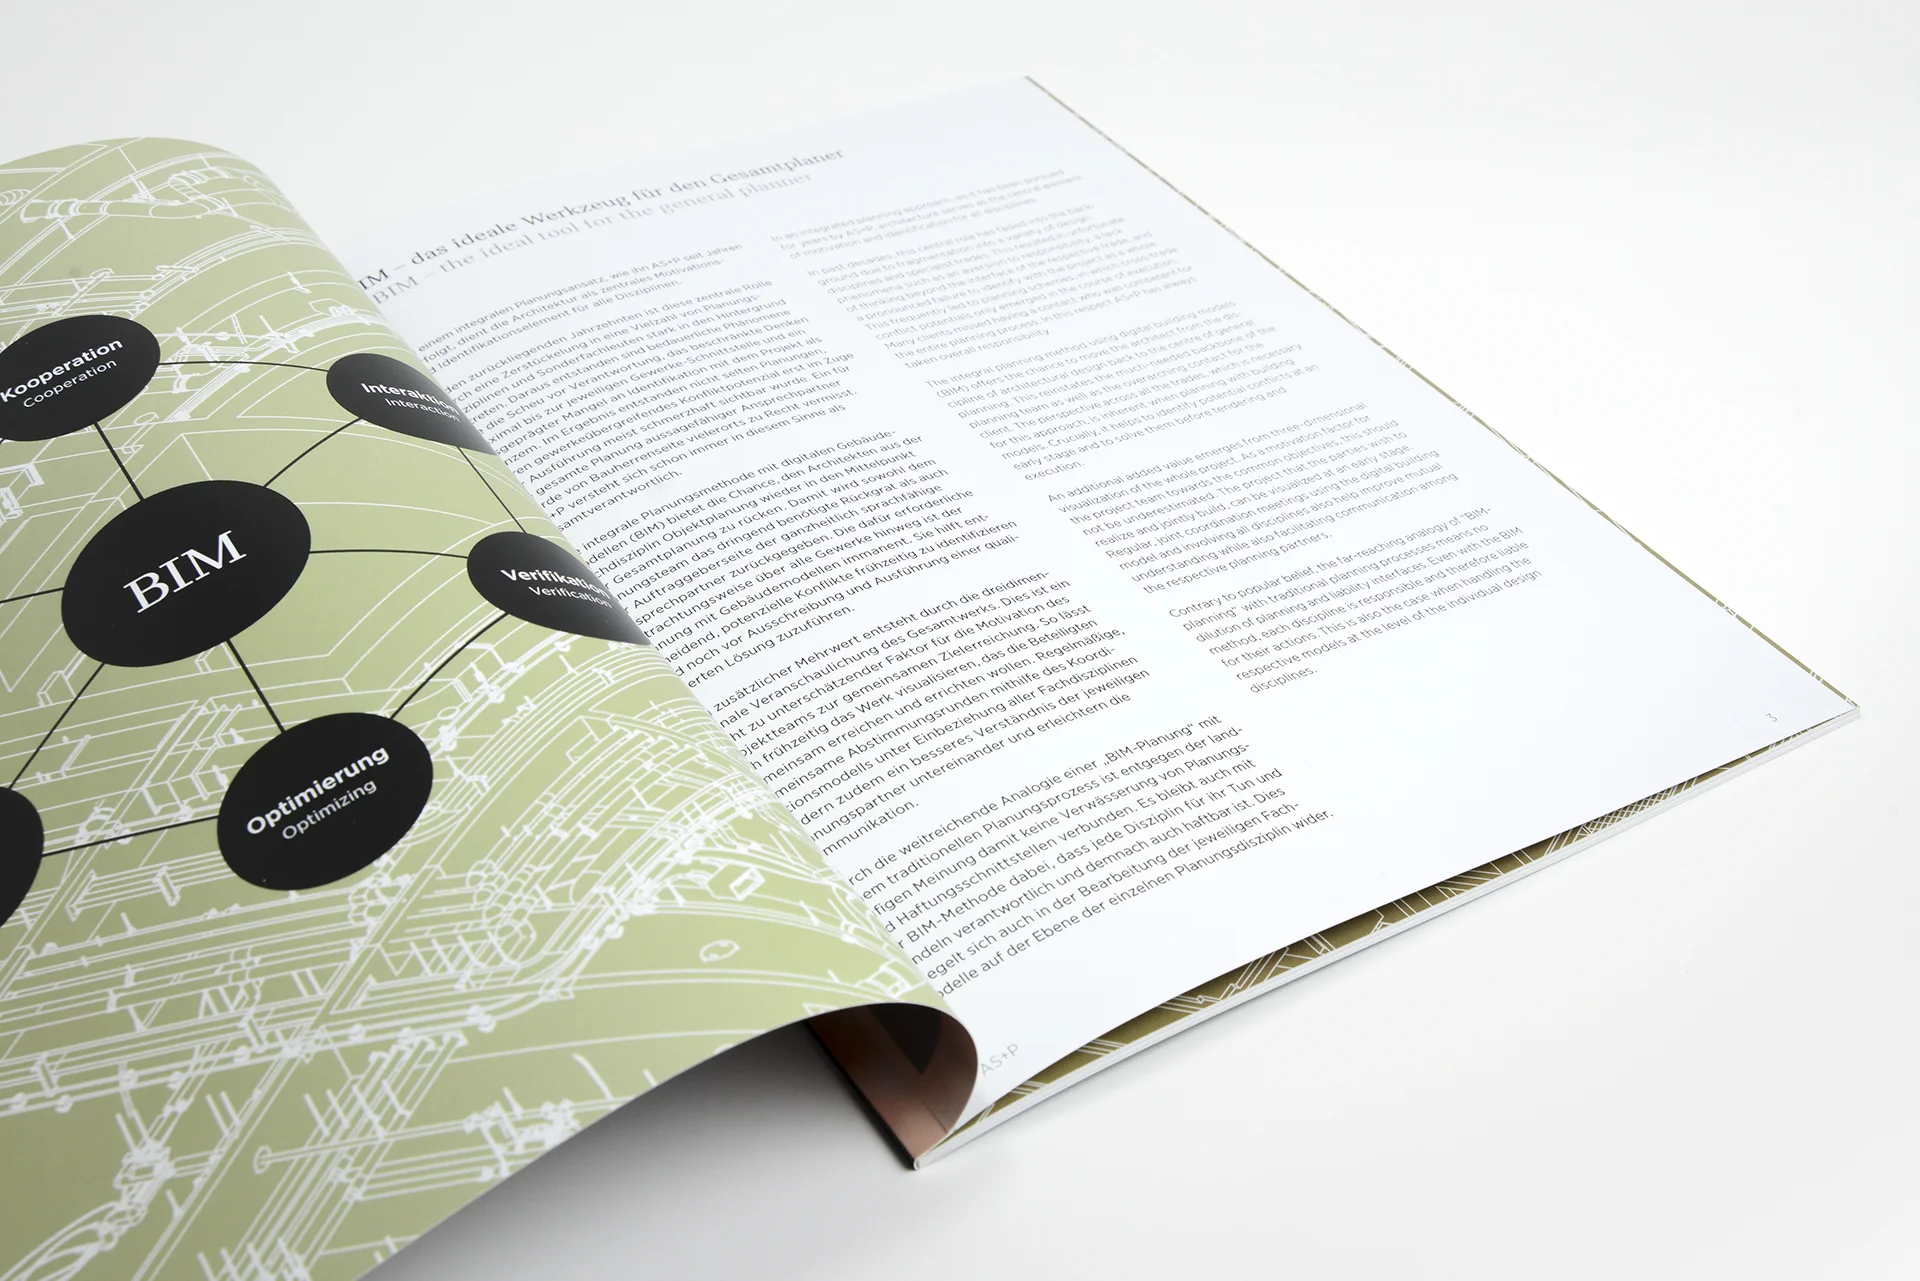 Broschüre (Editorial Design) - Intergrale Planung / Building Information Modelling - AS+P Albert Speer + Partner